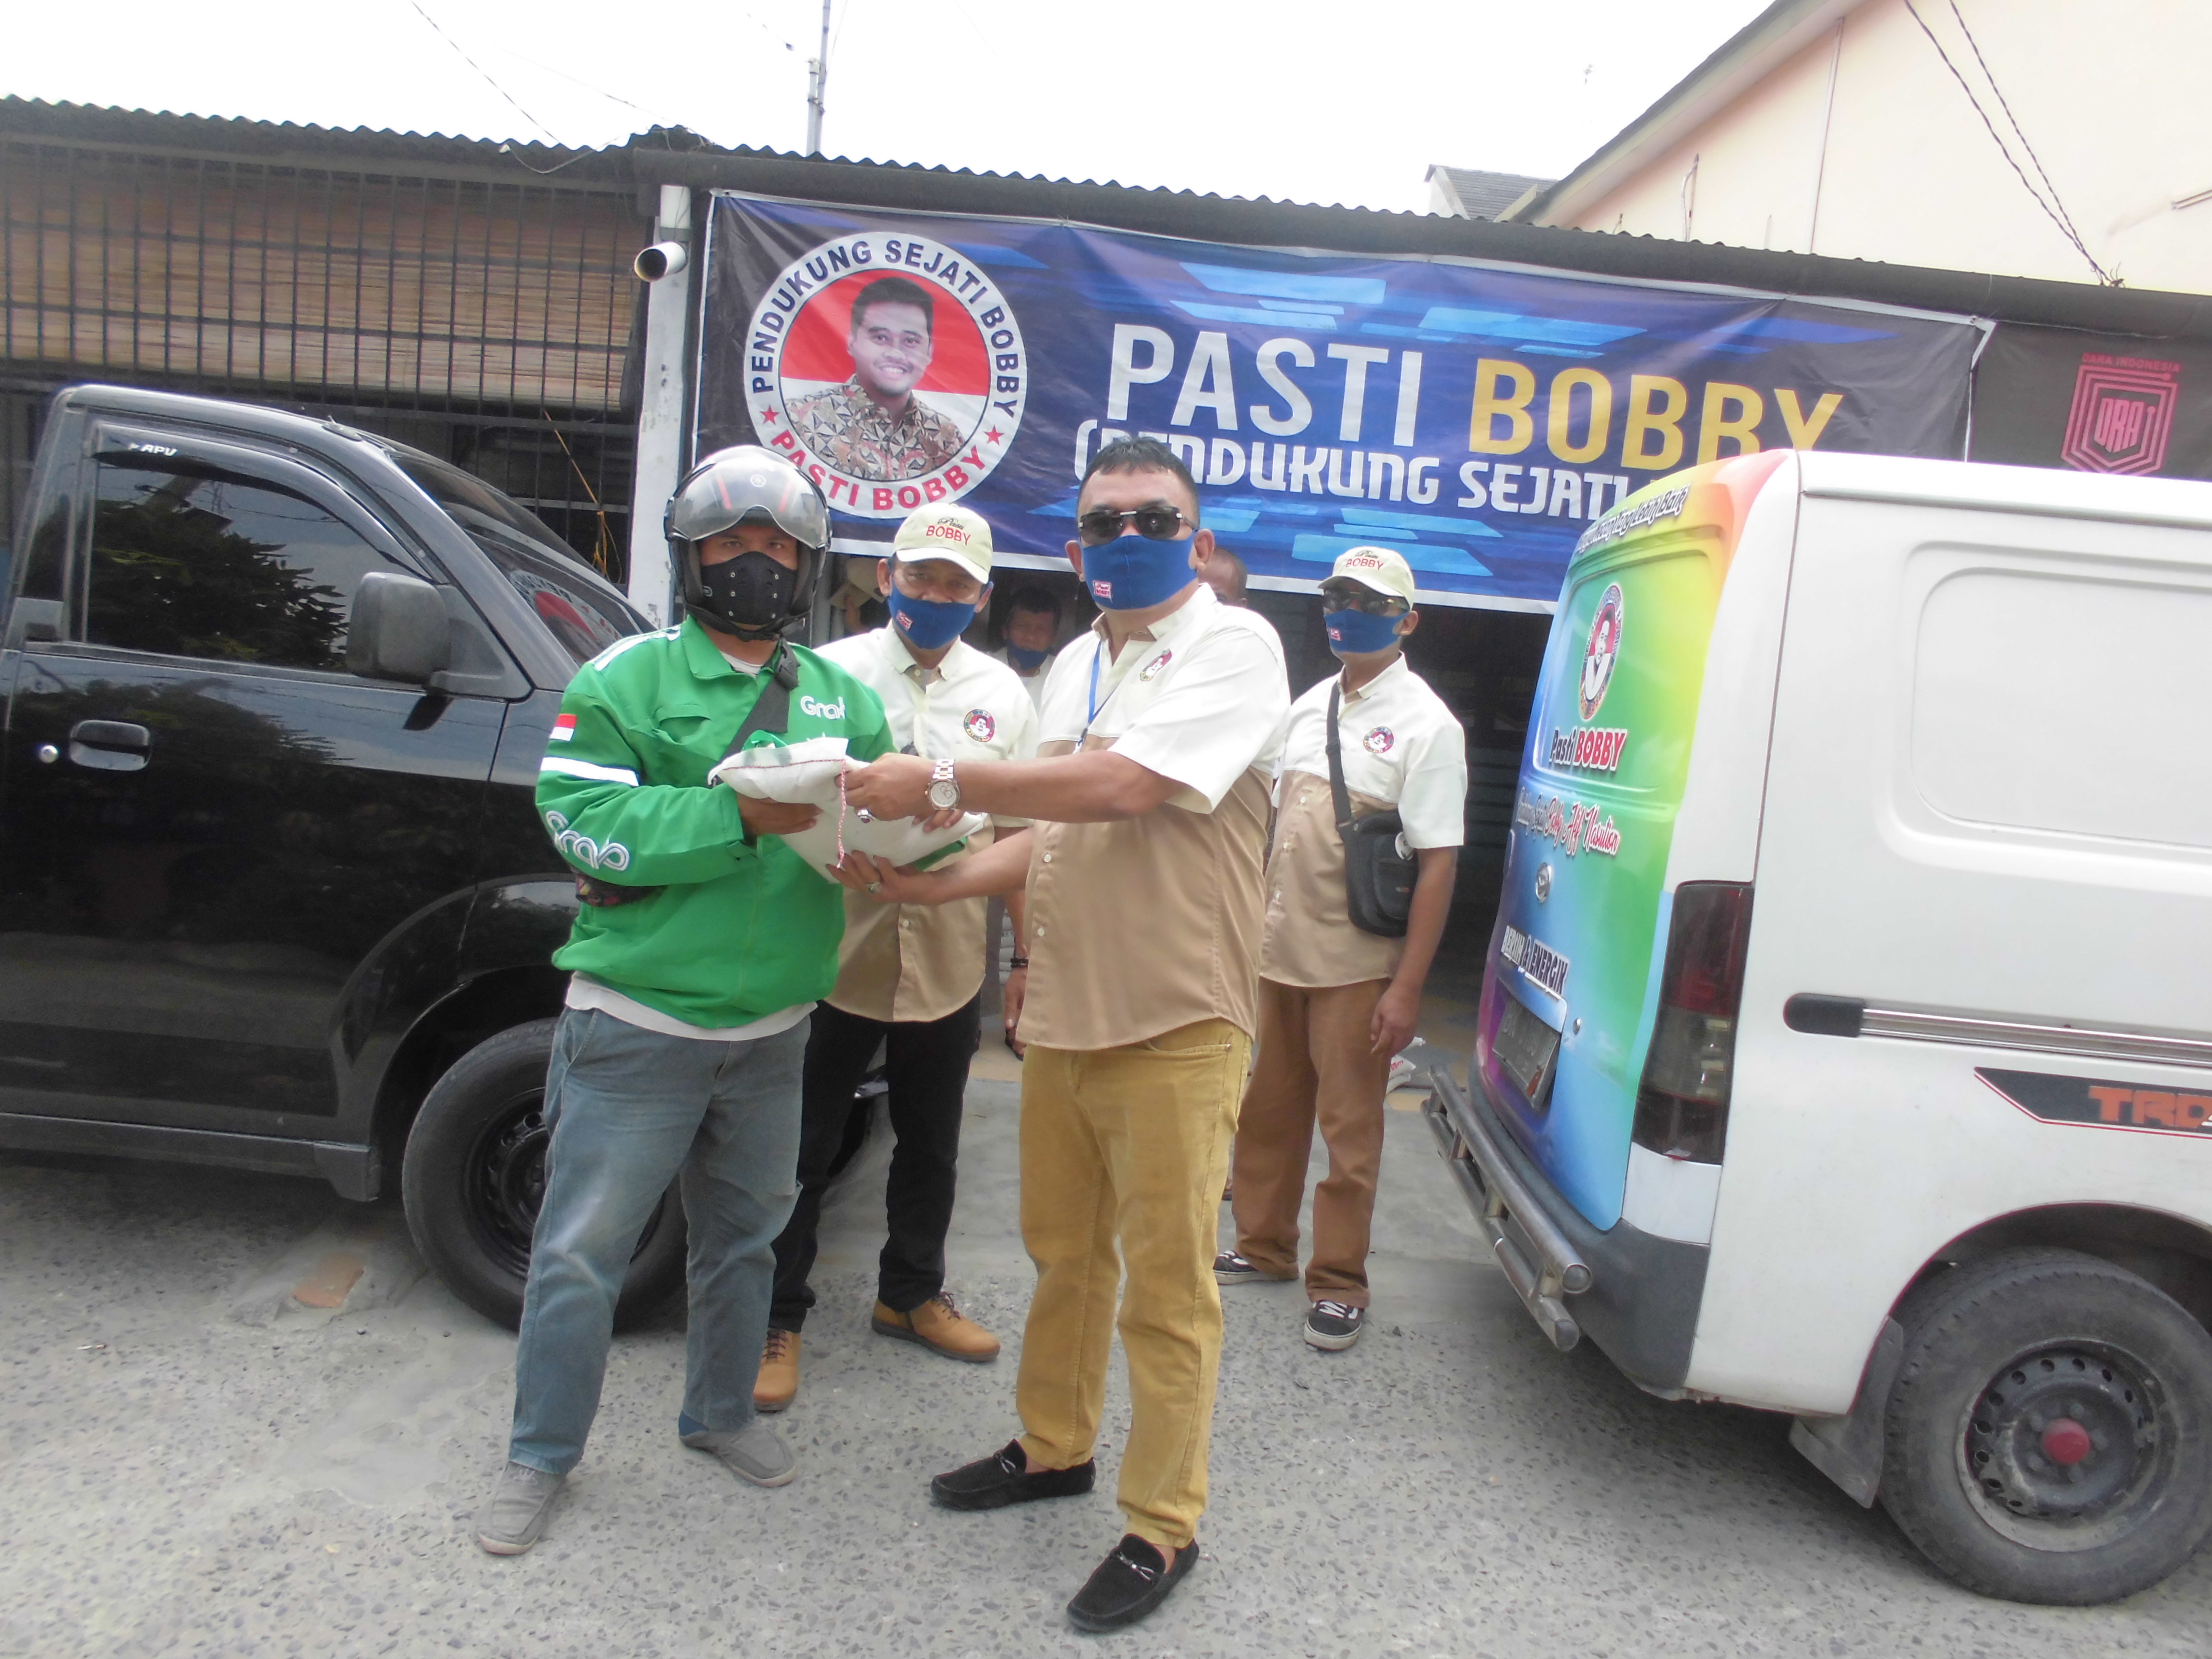 Relawan PASTI Bobby Nasution Bagikan Sembako